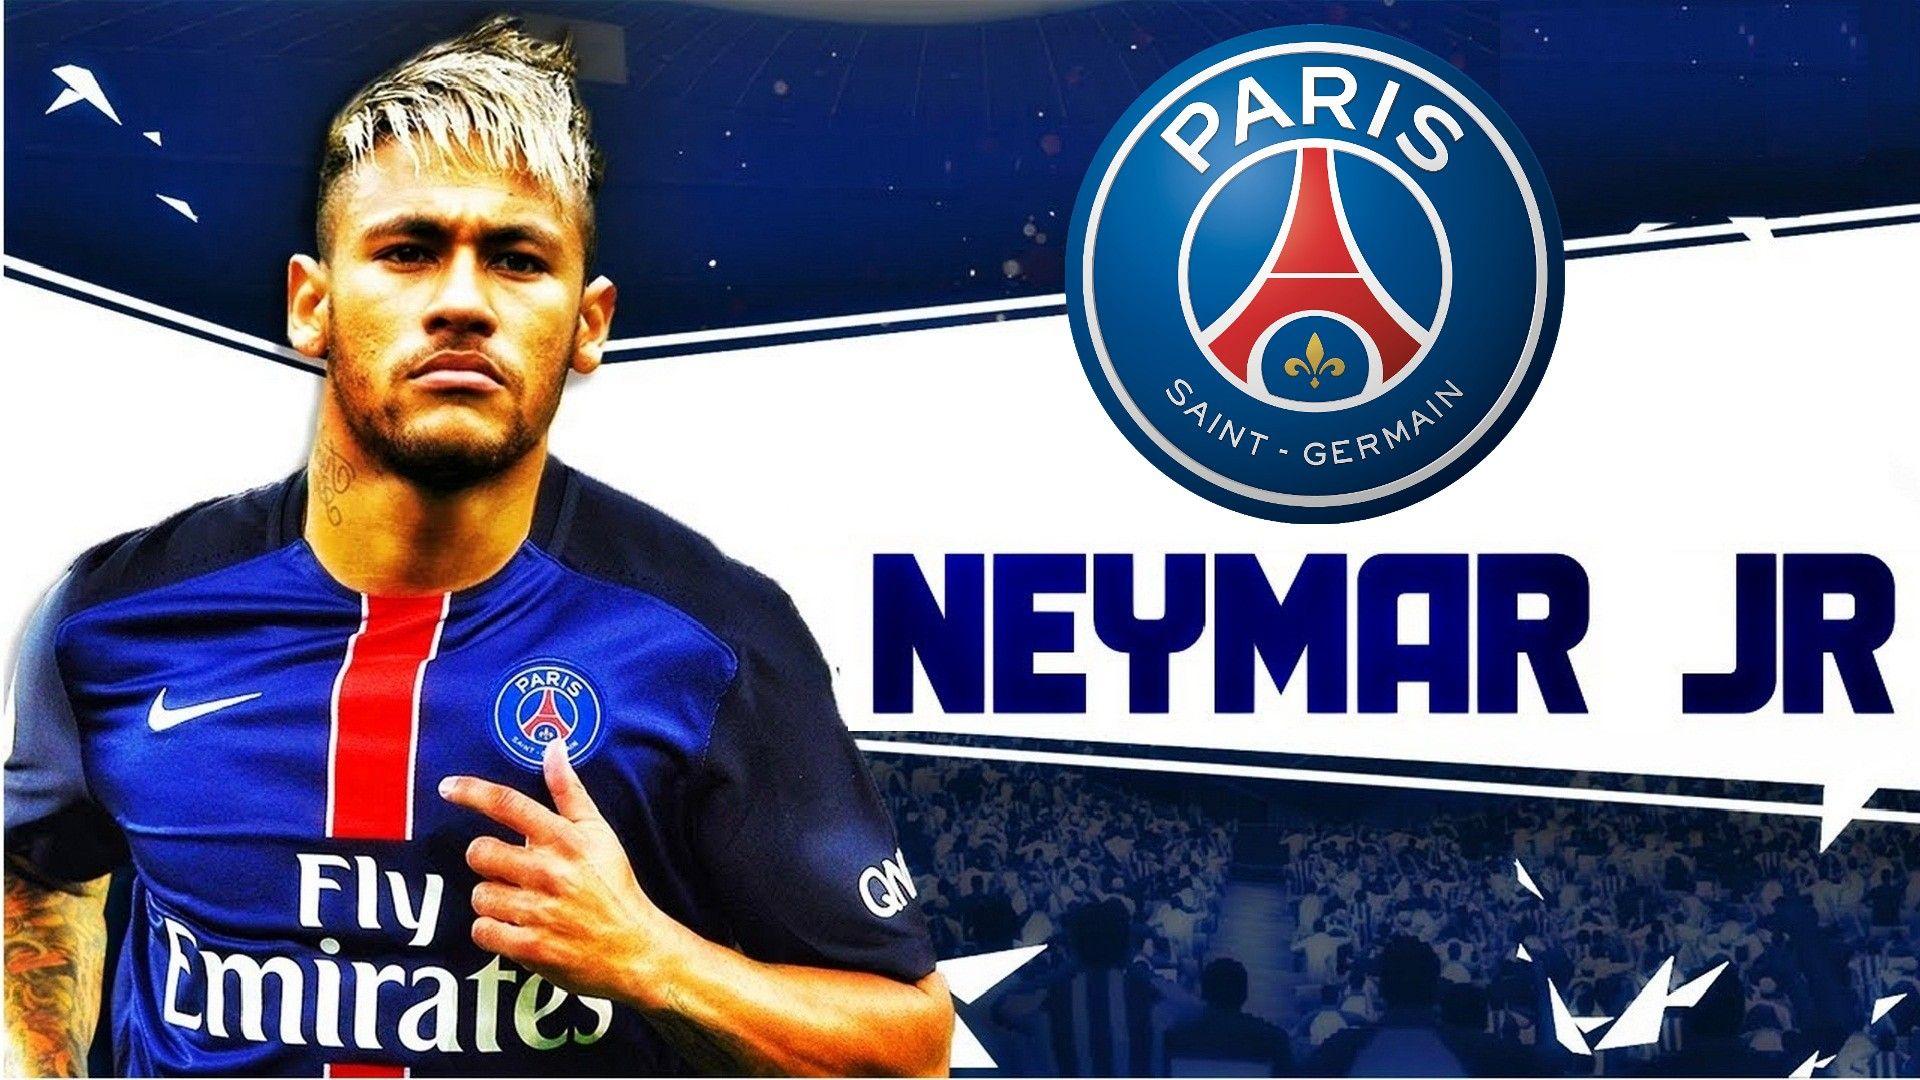 Neymar Paris Saint Germain Wallpaper Football Wallpaper